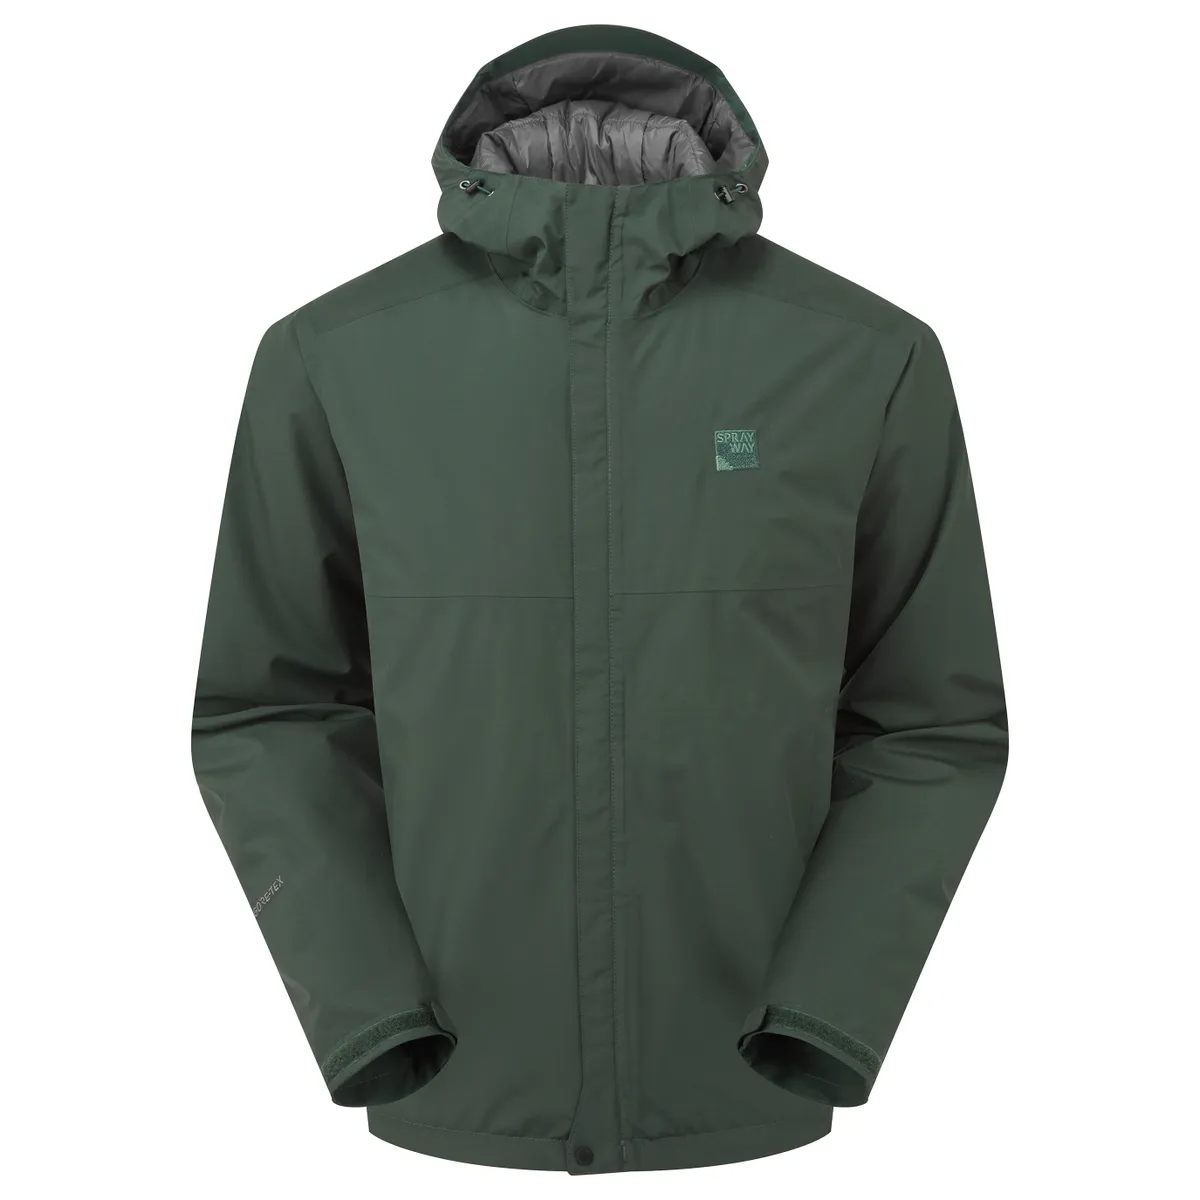 Green waterproof jacket